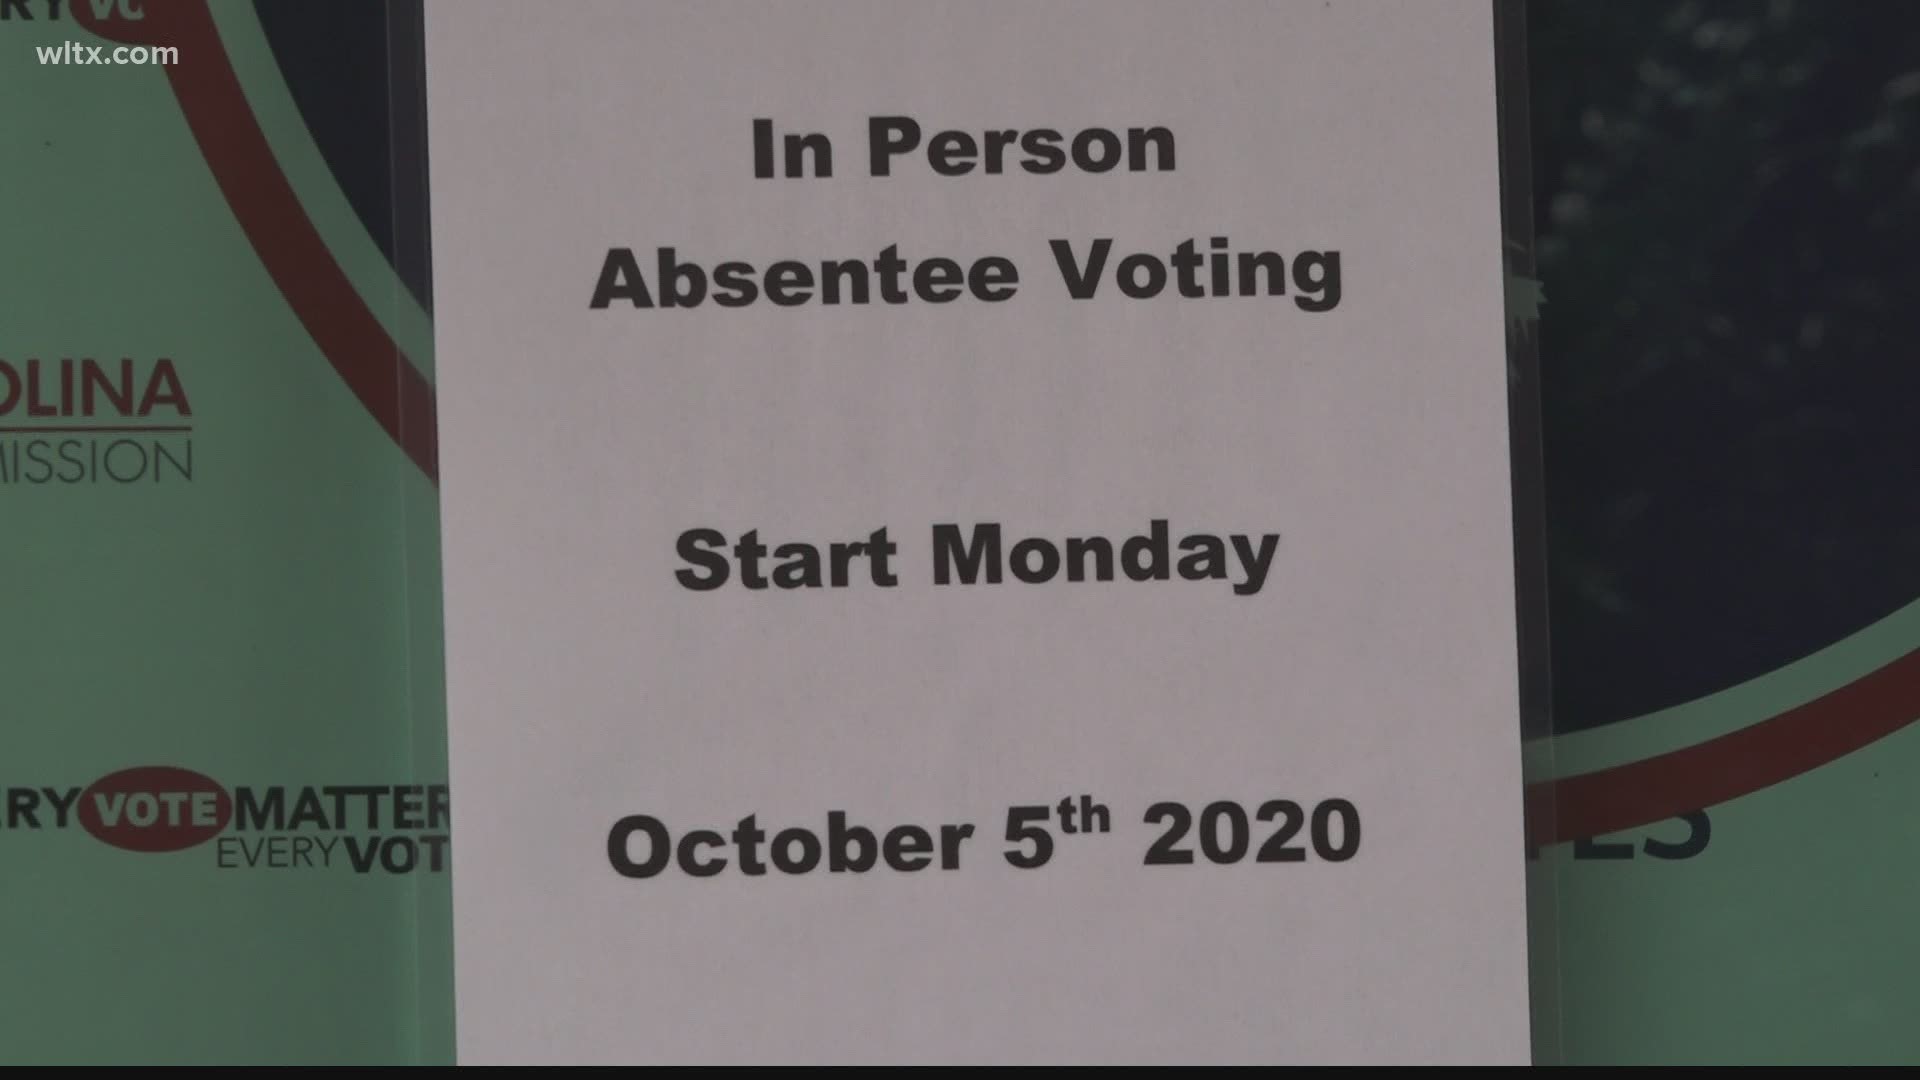 Absentee voting to begin on October 5.